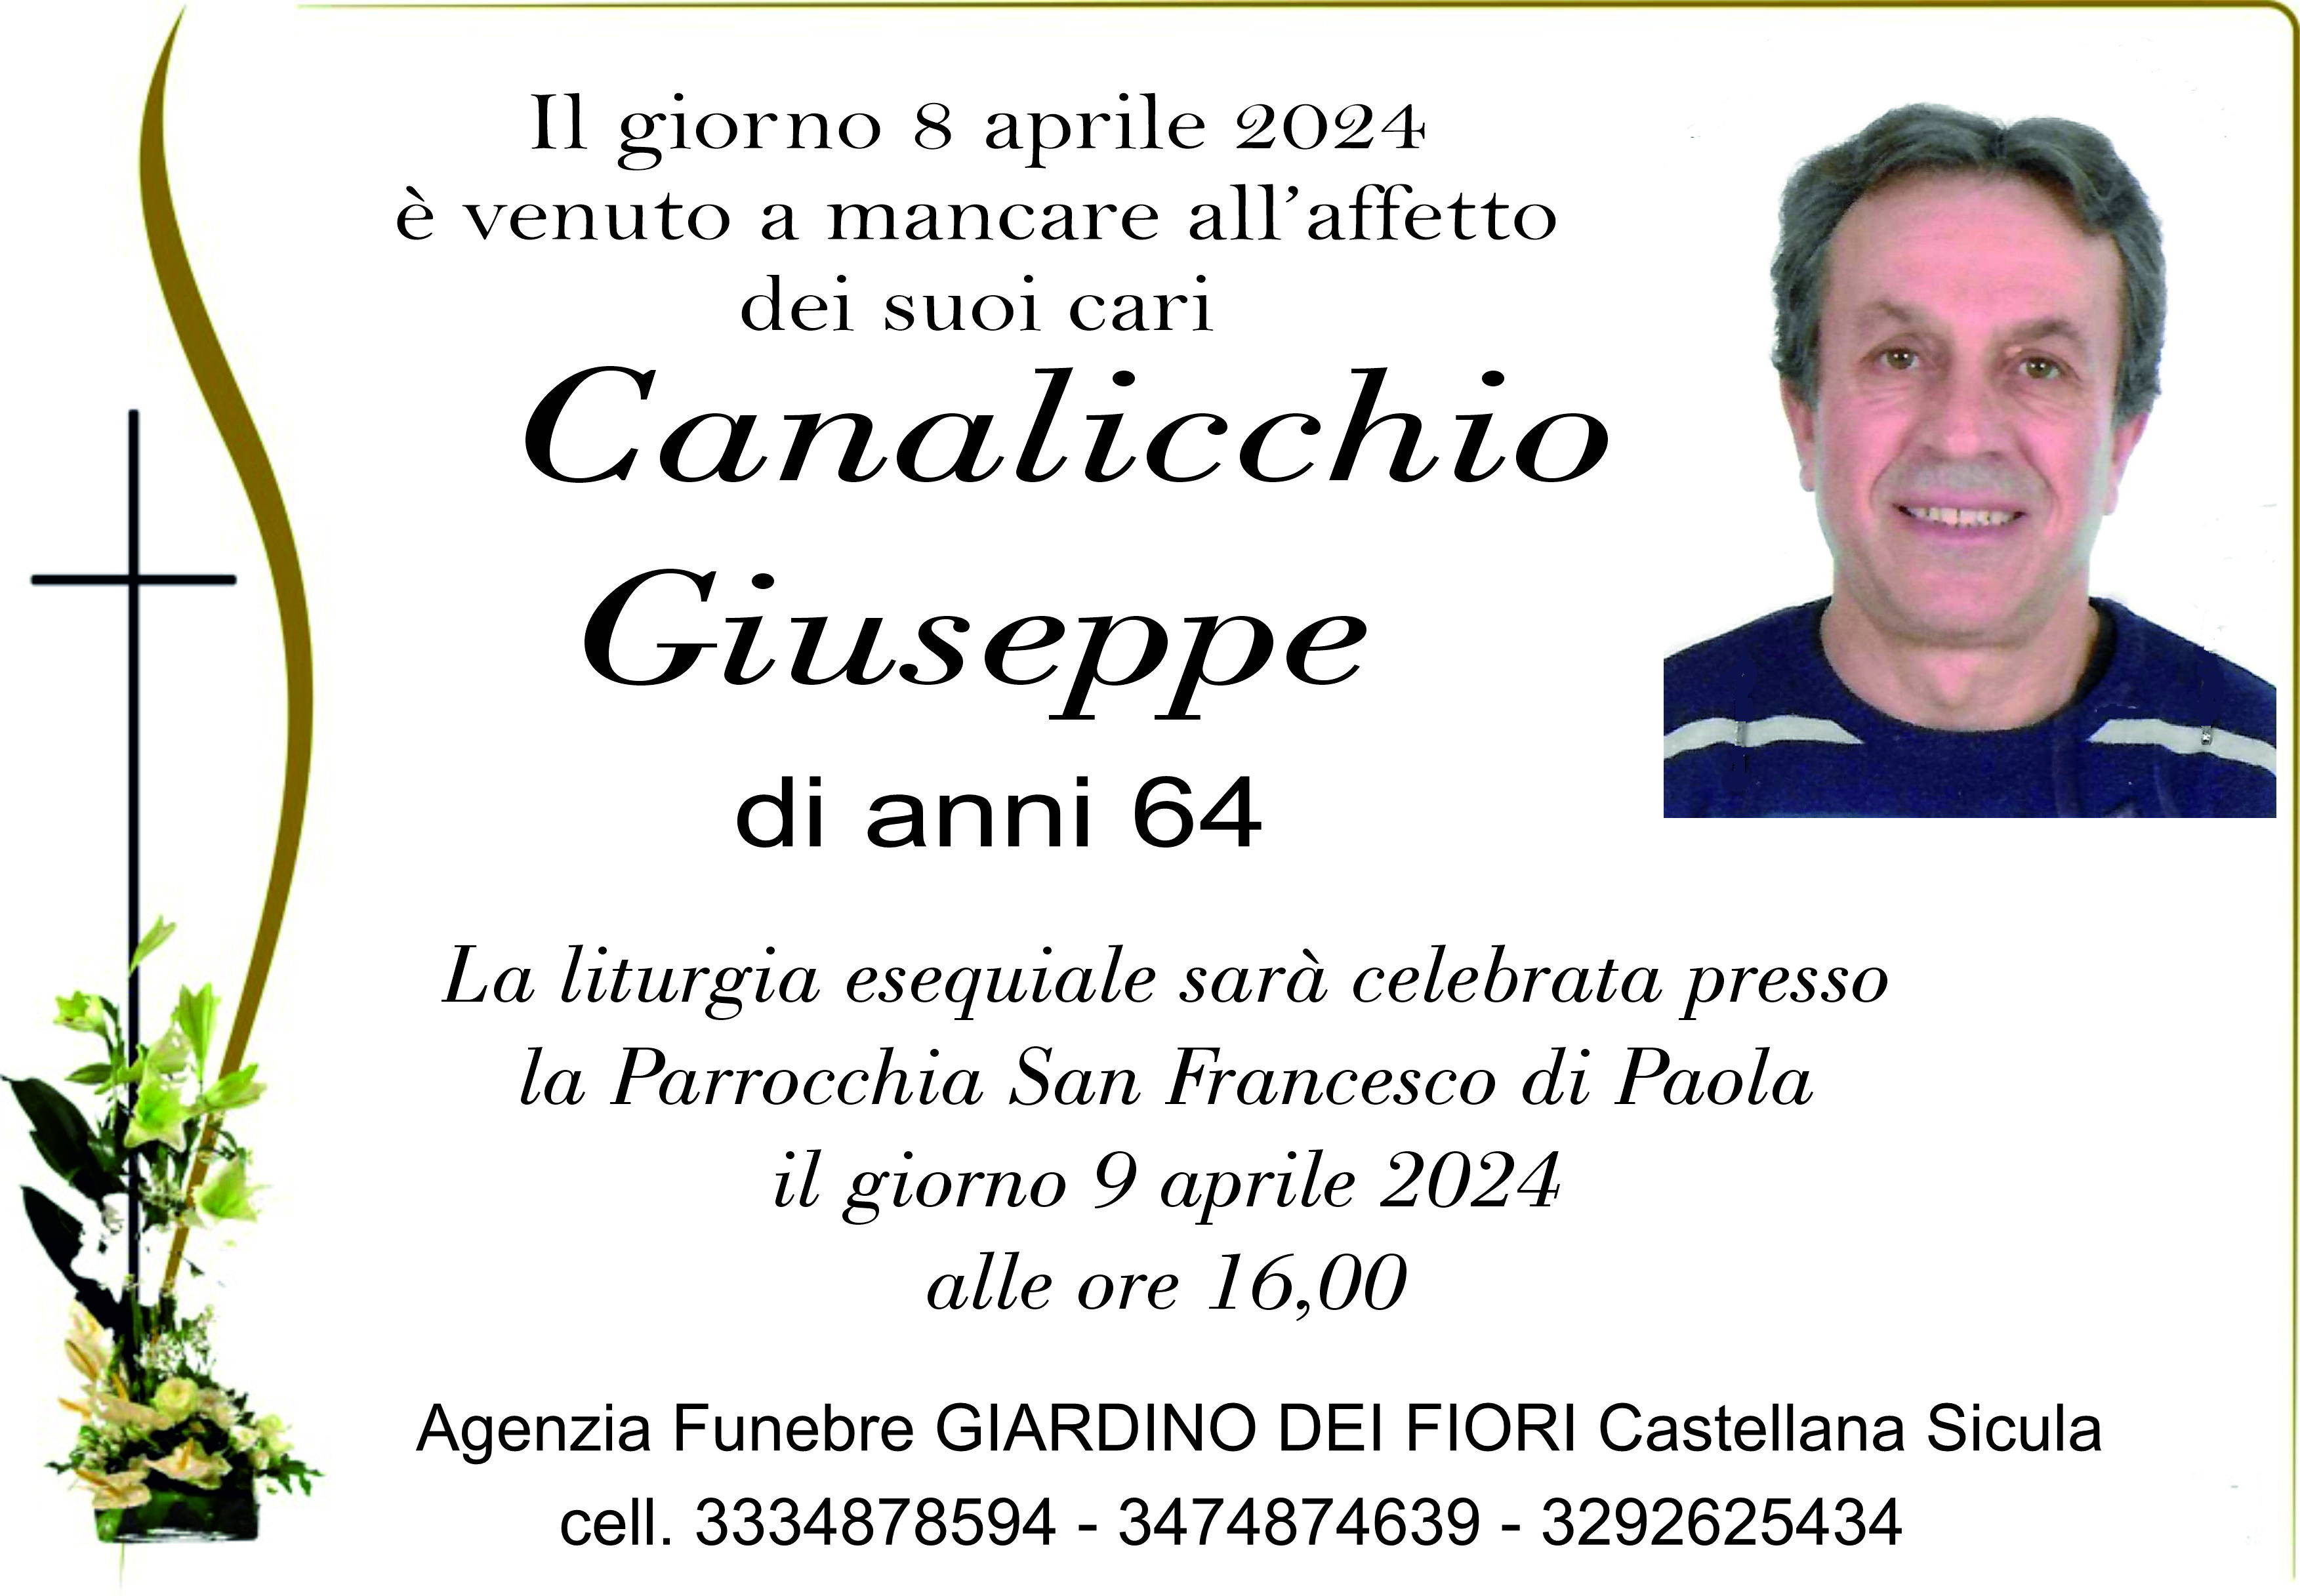 Giuseppe Canalicchio